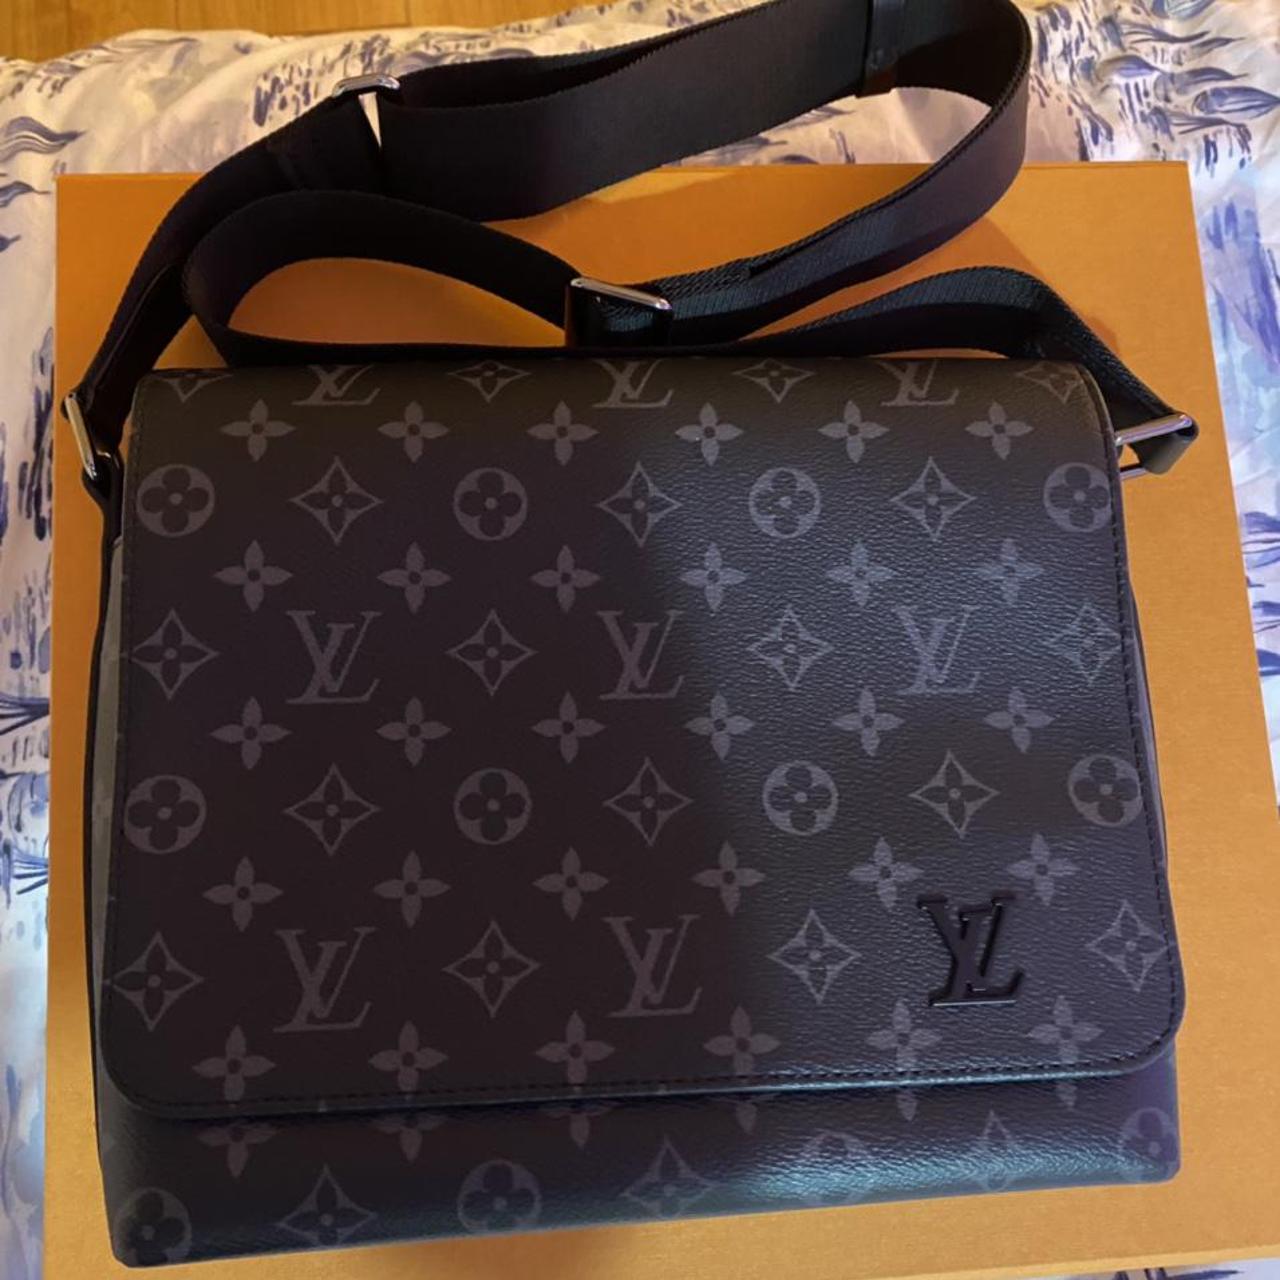 Louis Vuitton DISTRICT PM MESSENGER BAG, A stylish